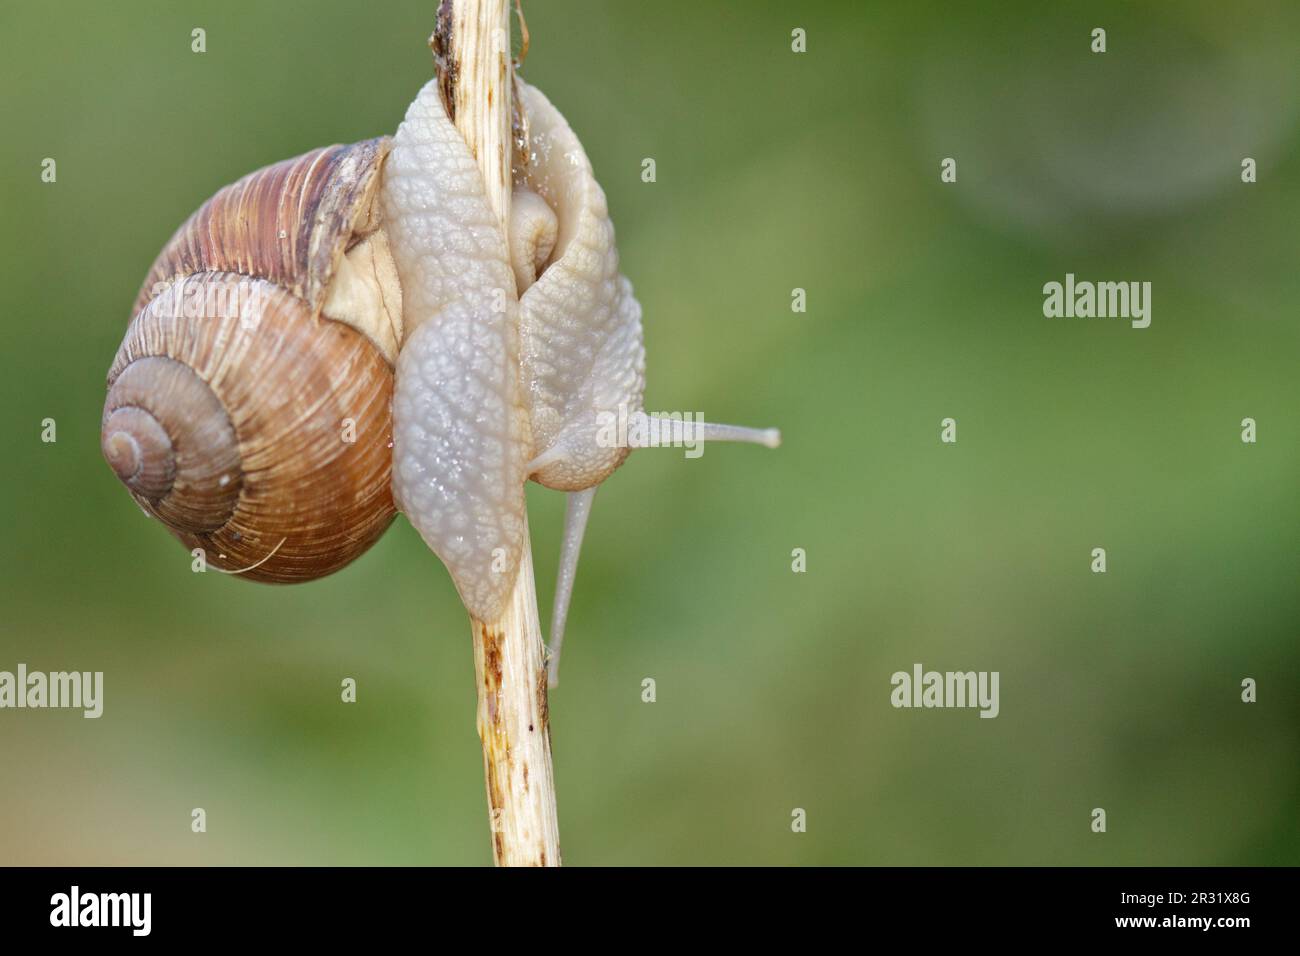 Burgundy snail (Helix pomatia) close up,blurred green background. Stock Photo